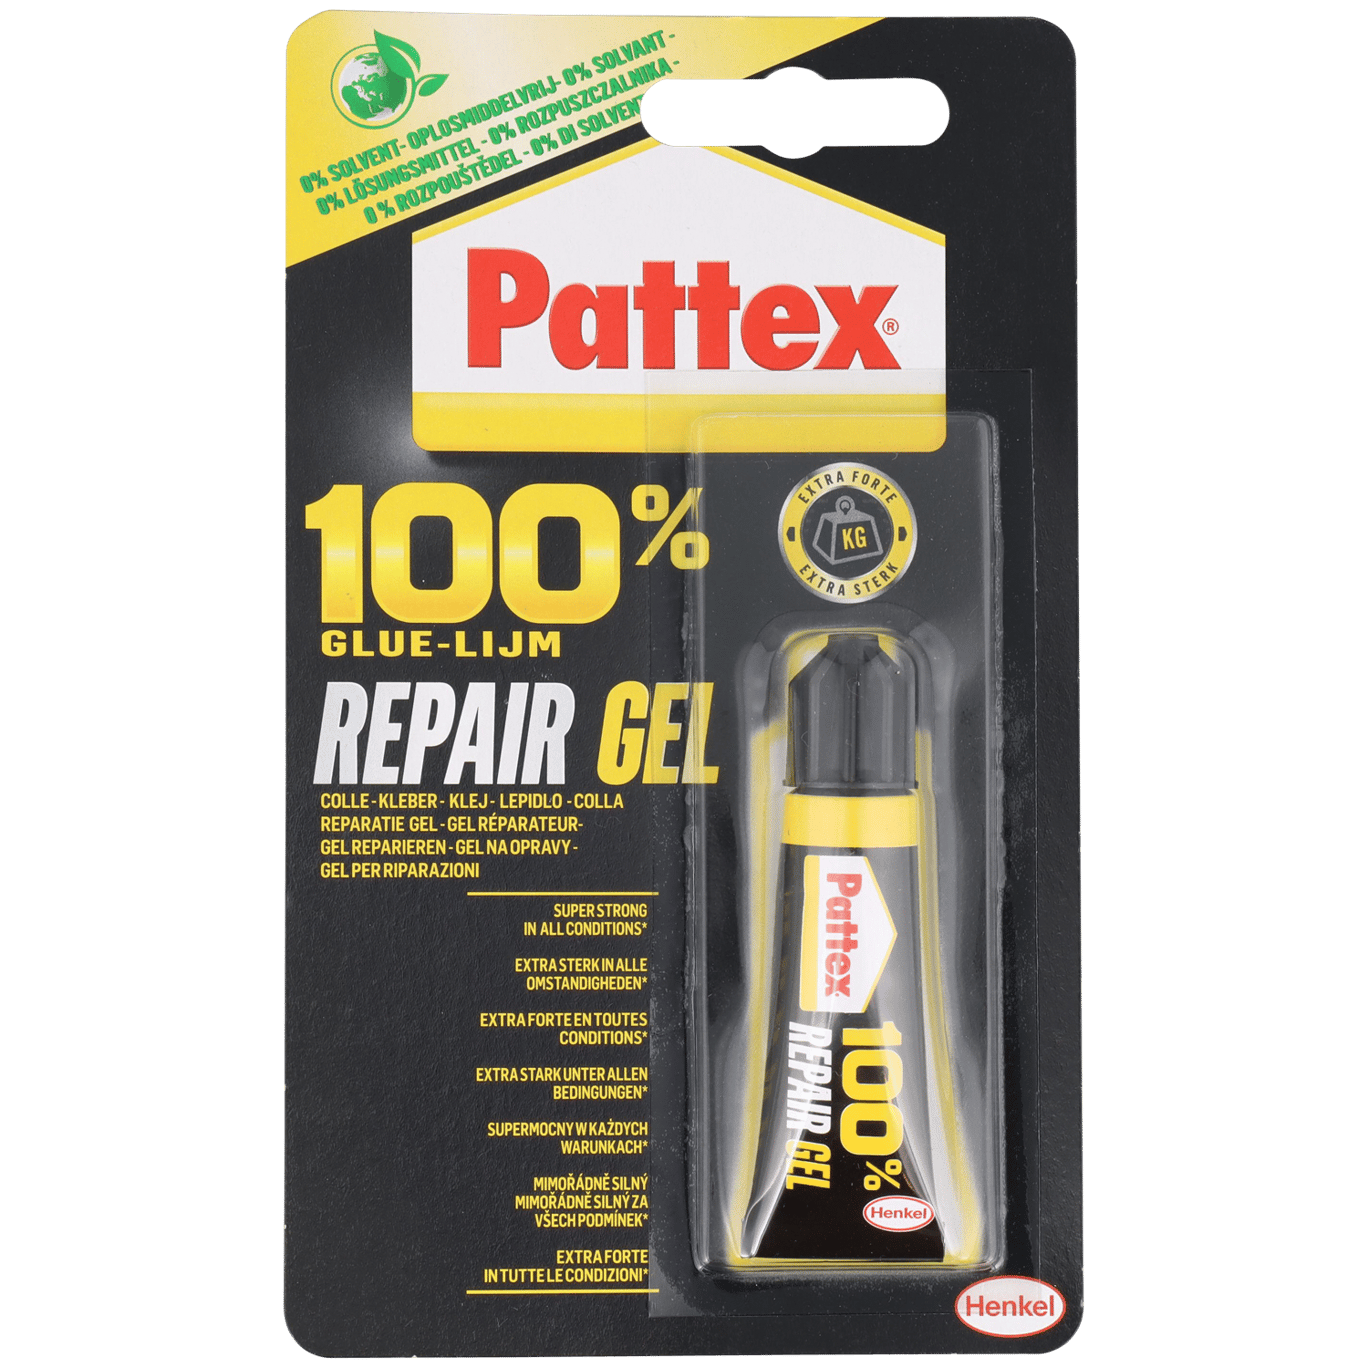 Aanvrager Heiligdom Pracht Pattex 100% repair gel-lijm | Action.com